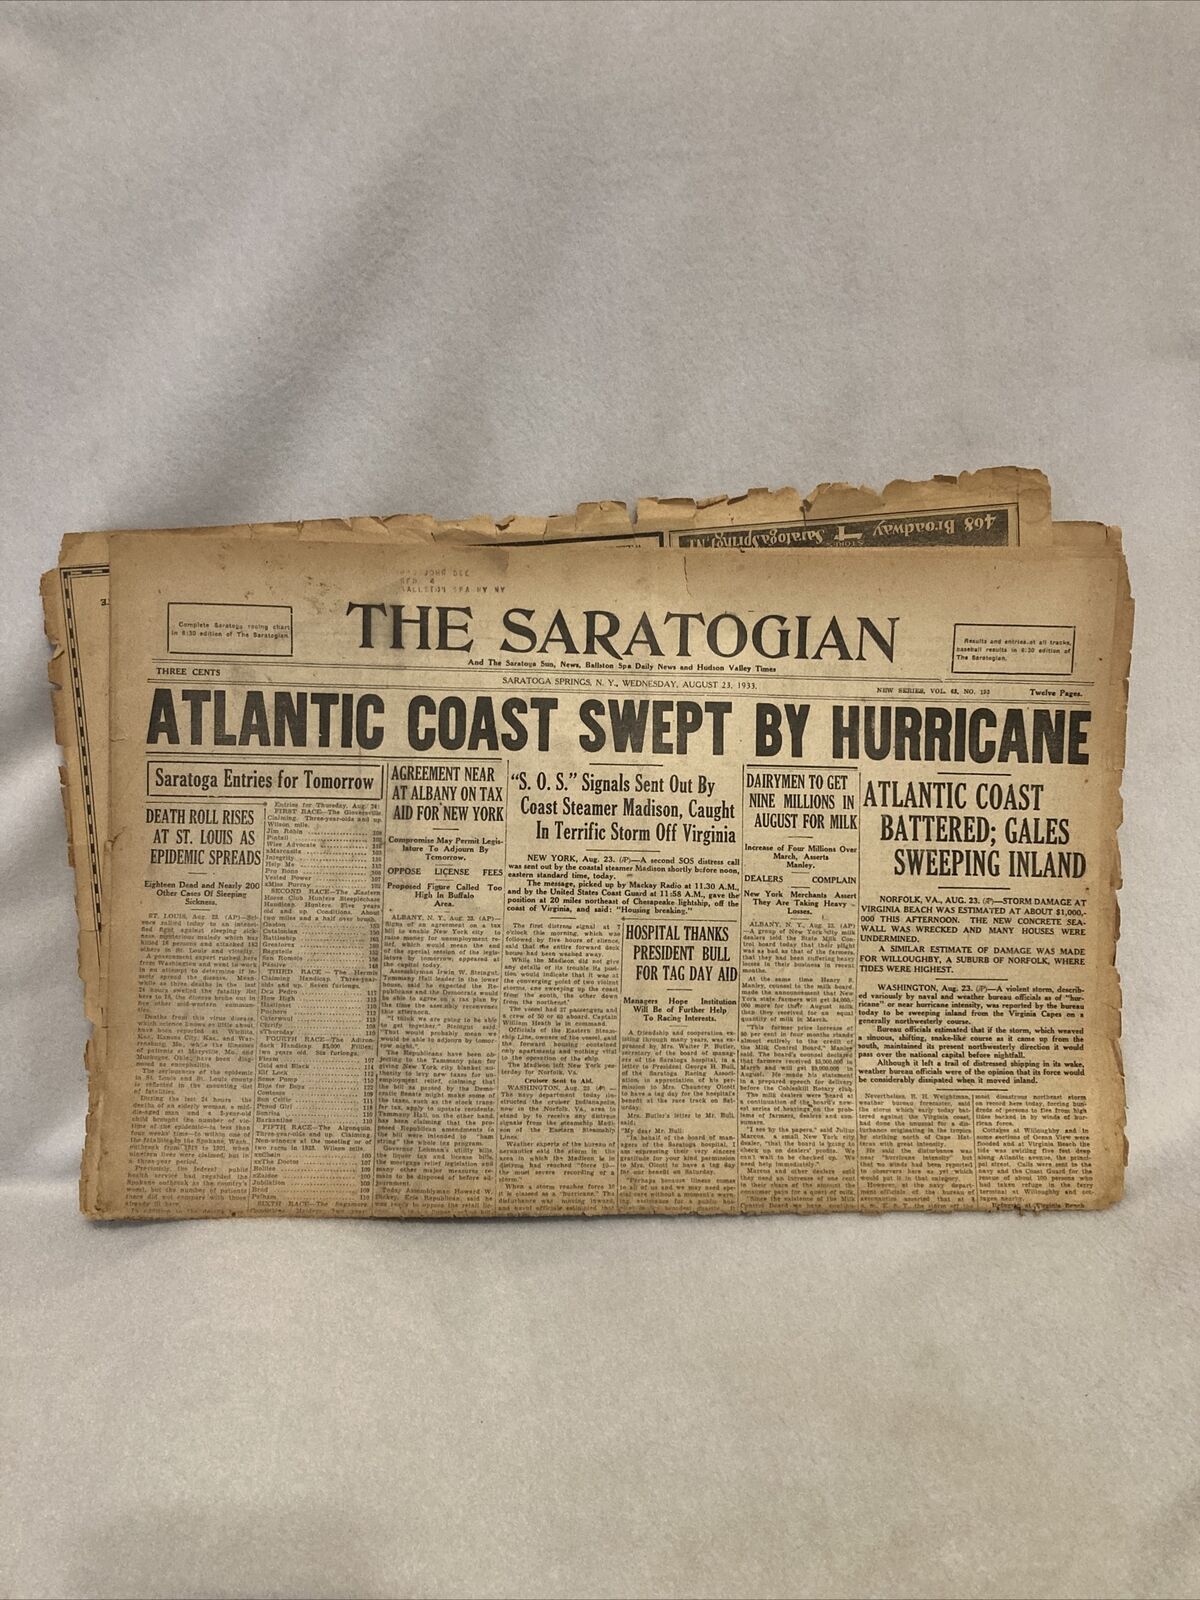 August 23,1933 The Saratogian Newspaper “Atlantic Coast Hurricane” *RARE*